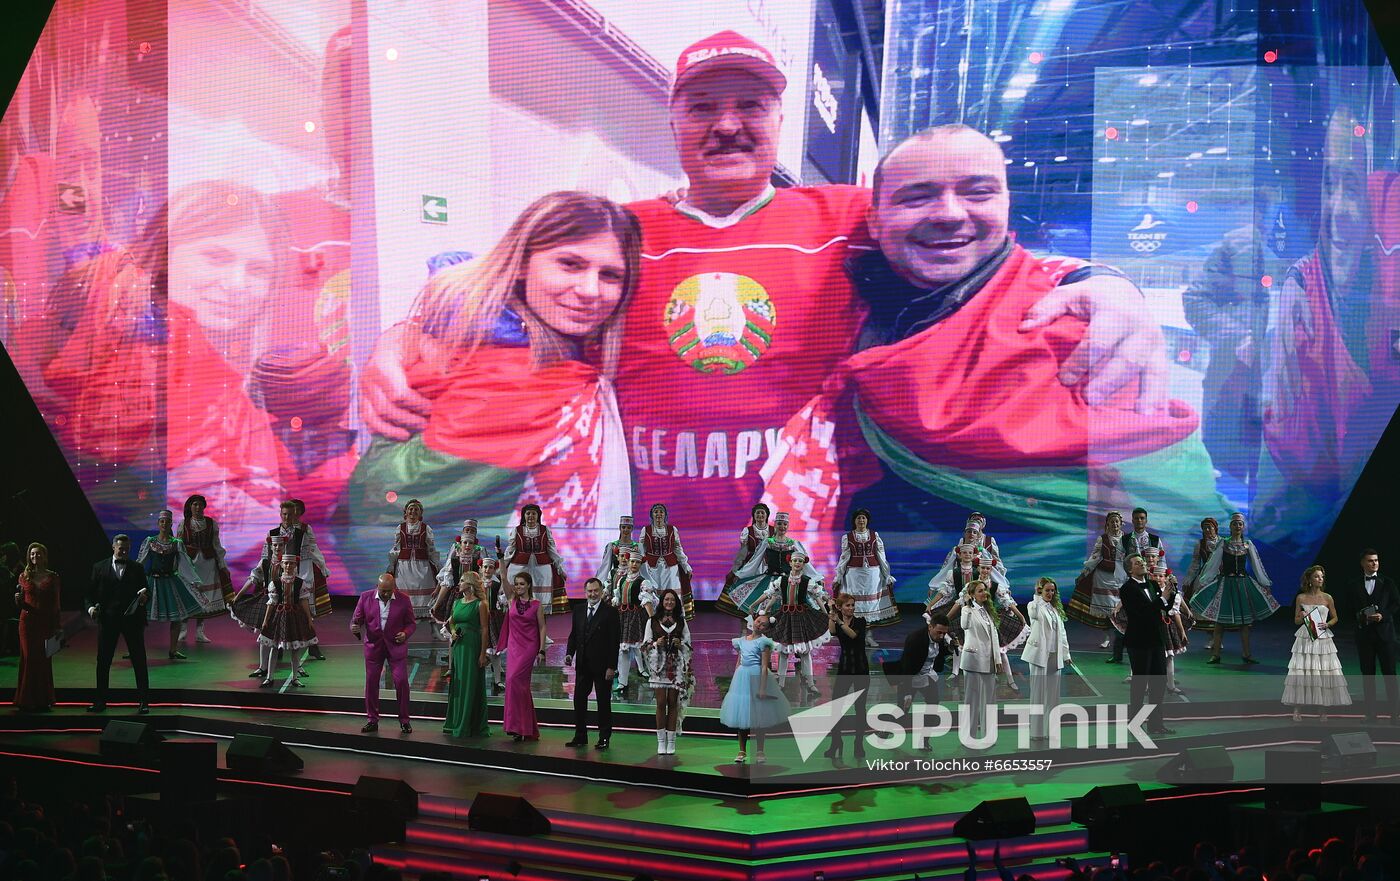 Belarus National Unity Day